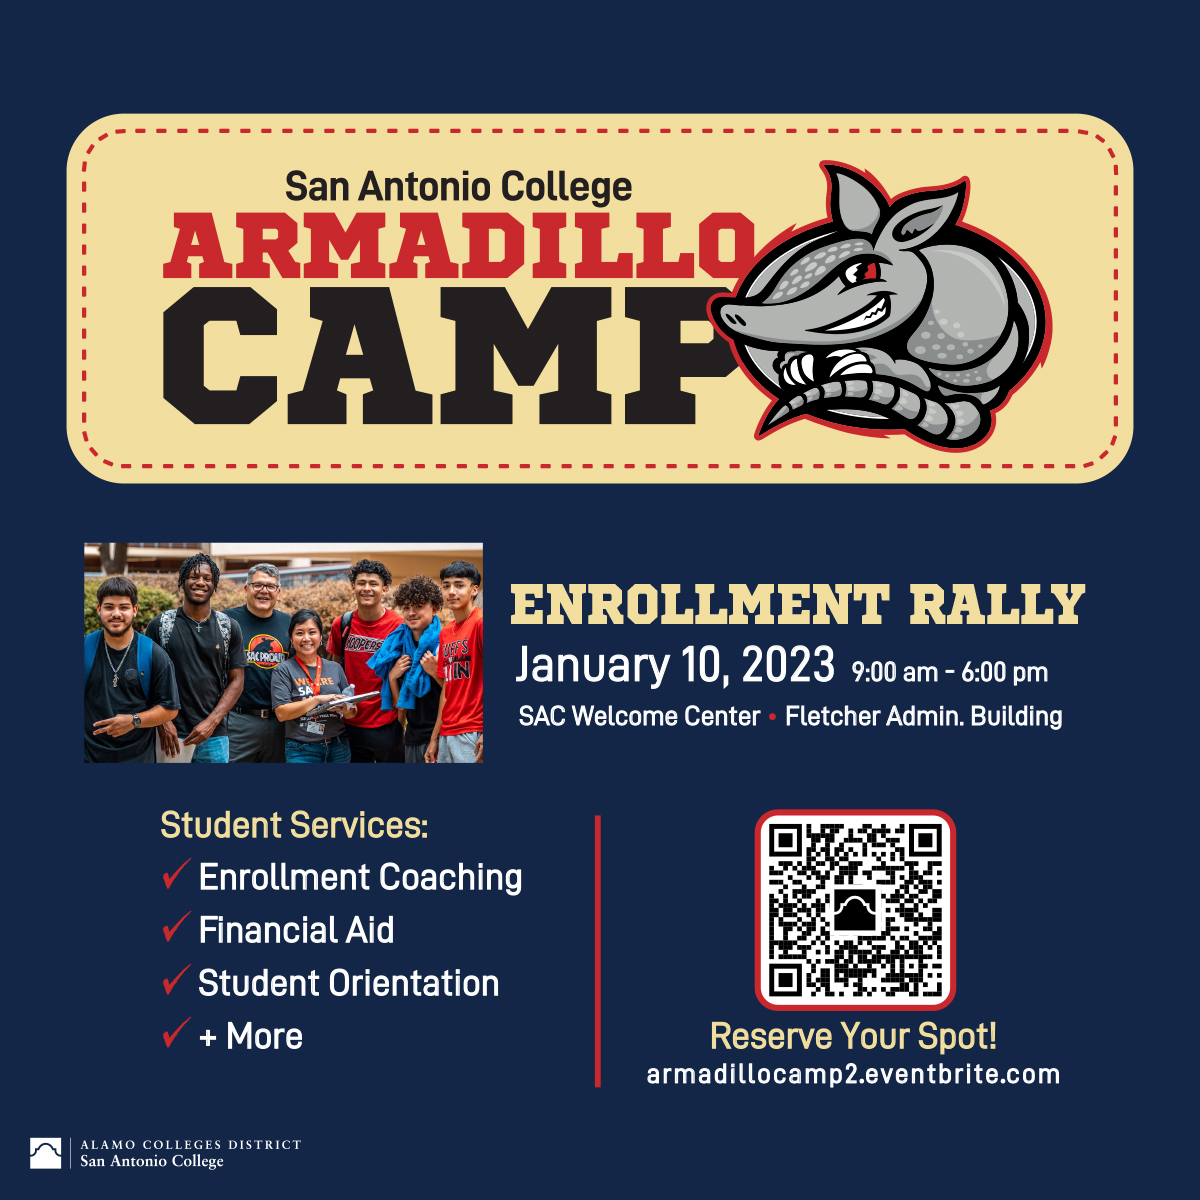 Armadillo Camp 011023 Flyer.jpg